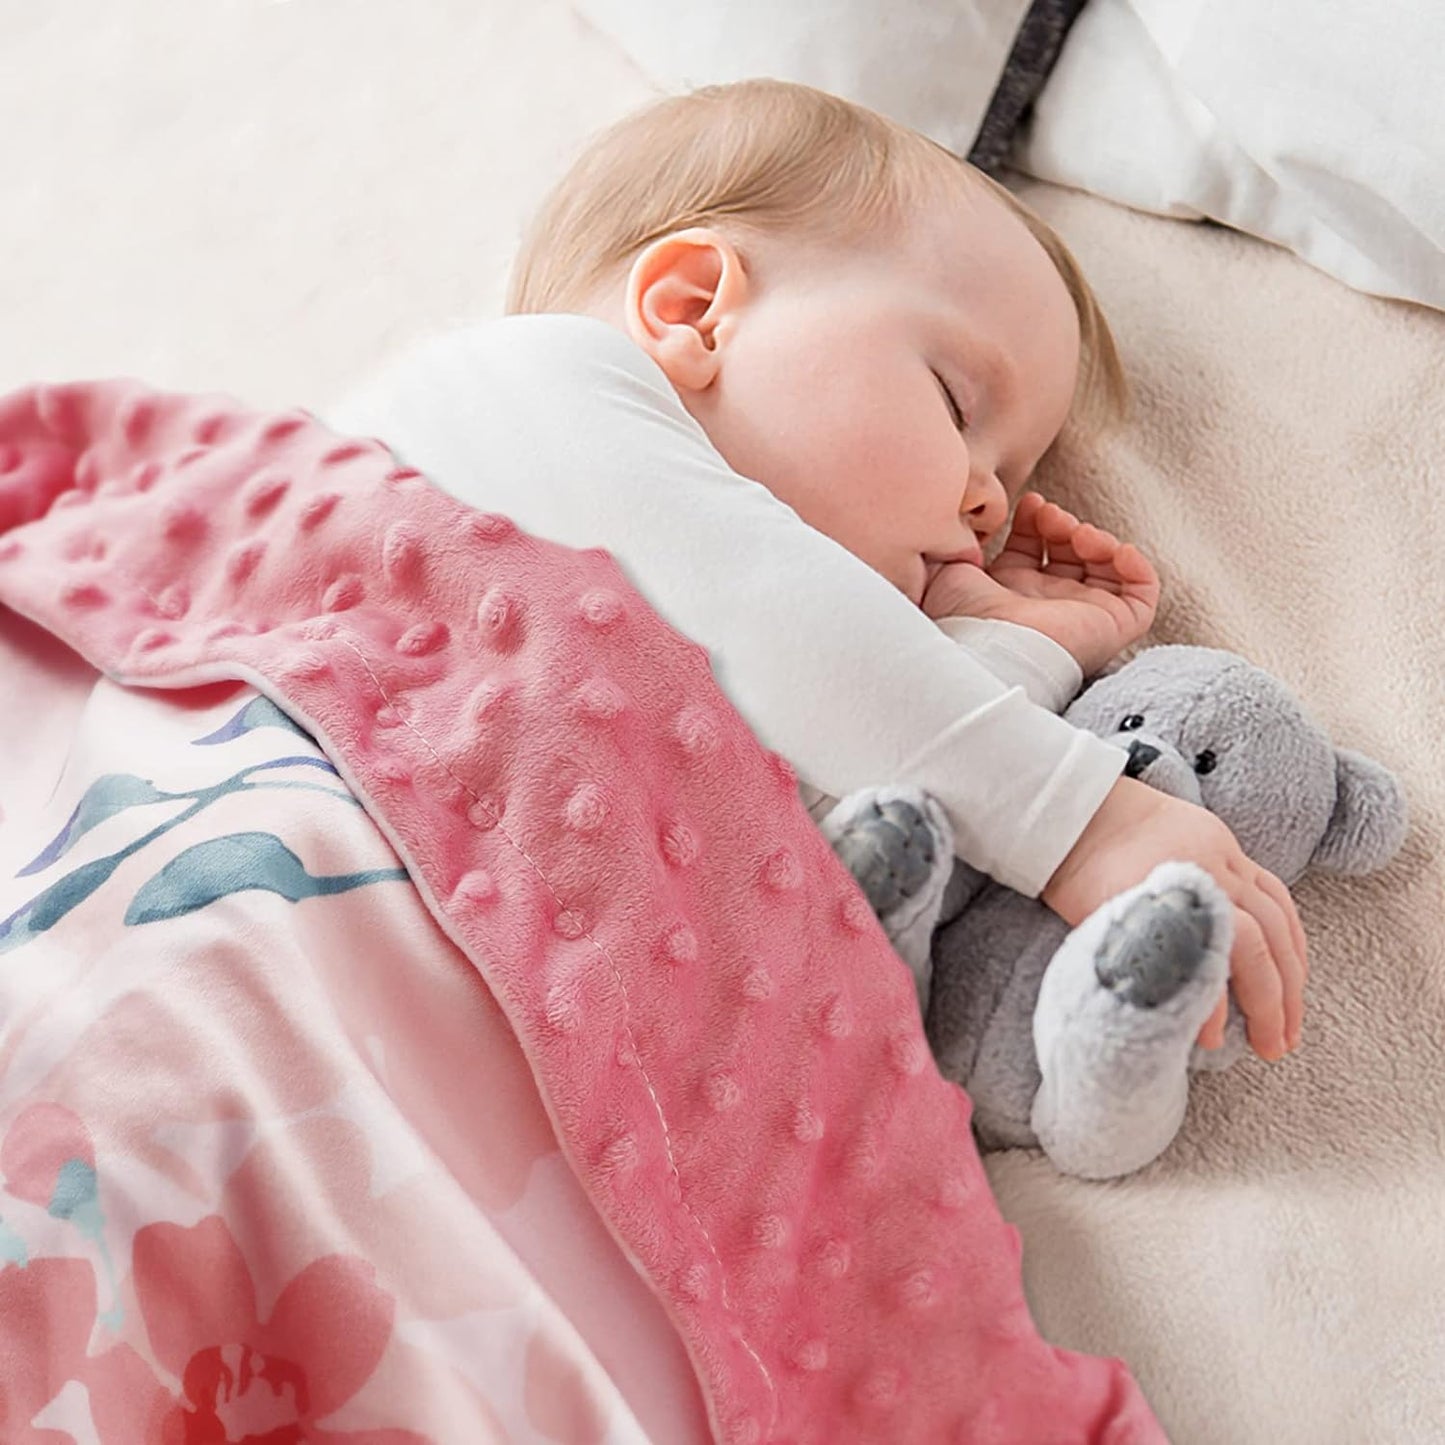 Soarwg Kids Baby Blankets Unisex Newborn Thick, Super Soft Comfy Rainbow Blankets, for Toddler Baby Nursery Bed Blanket Stroller Crib Shower Gifts, Standard 100 by Oeko-Tex, 40 x 30 Inch.